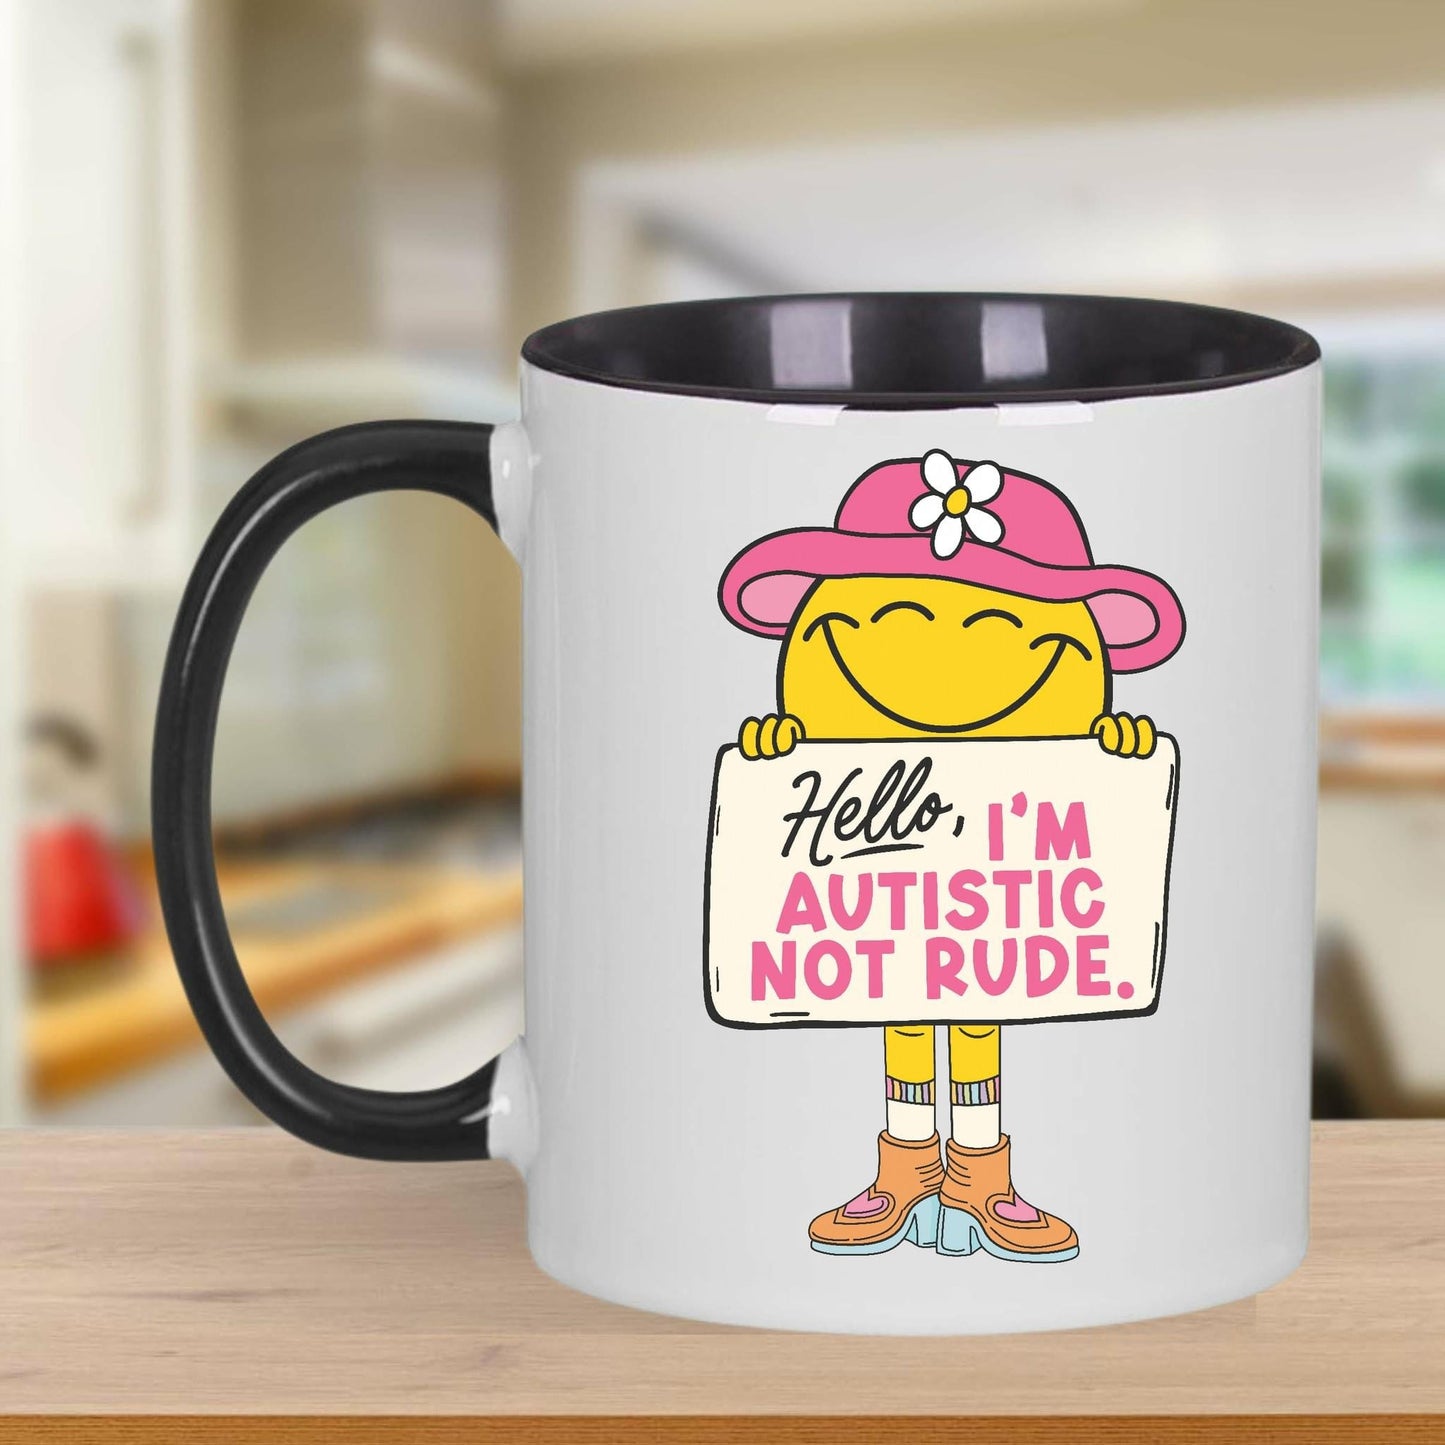 I’m autistic not rude mug